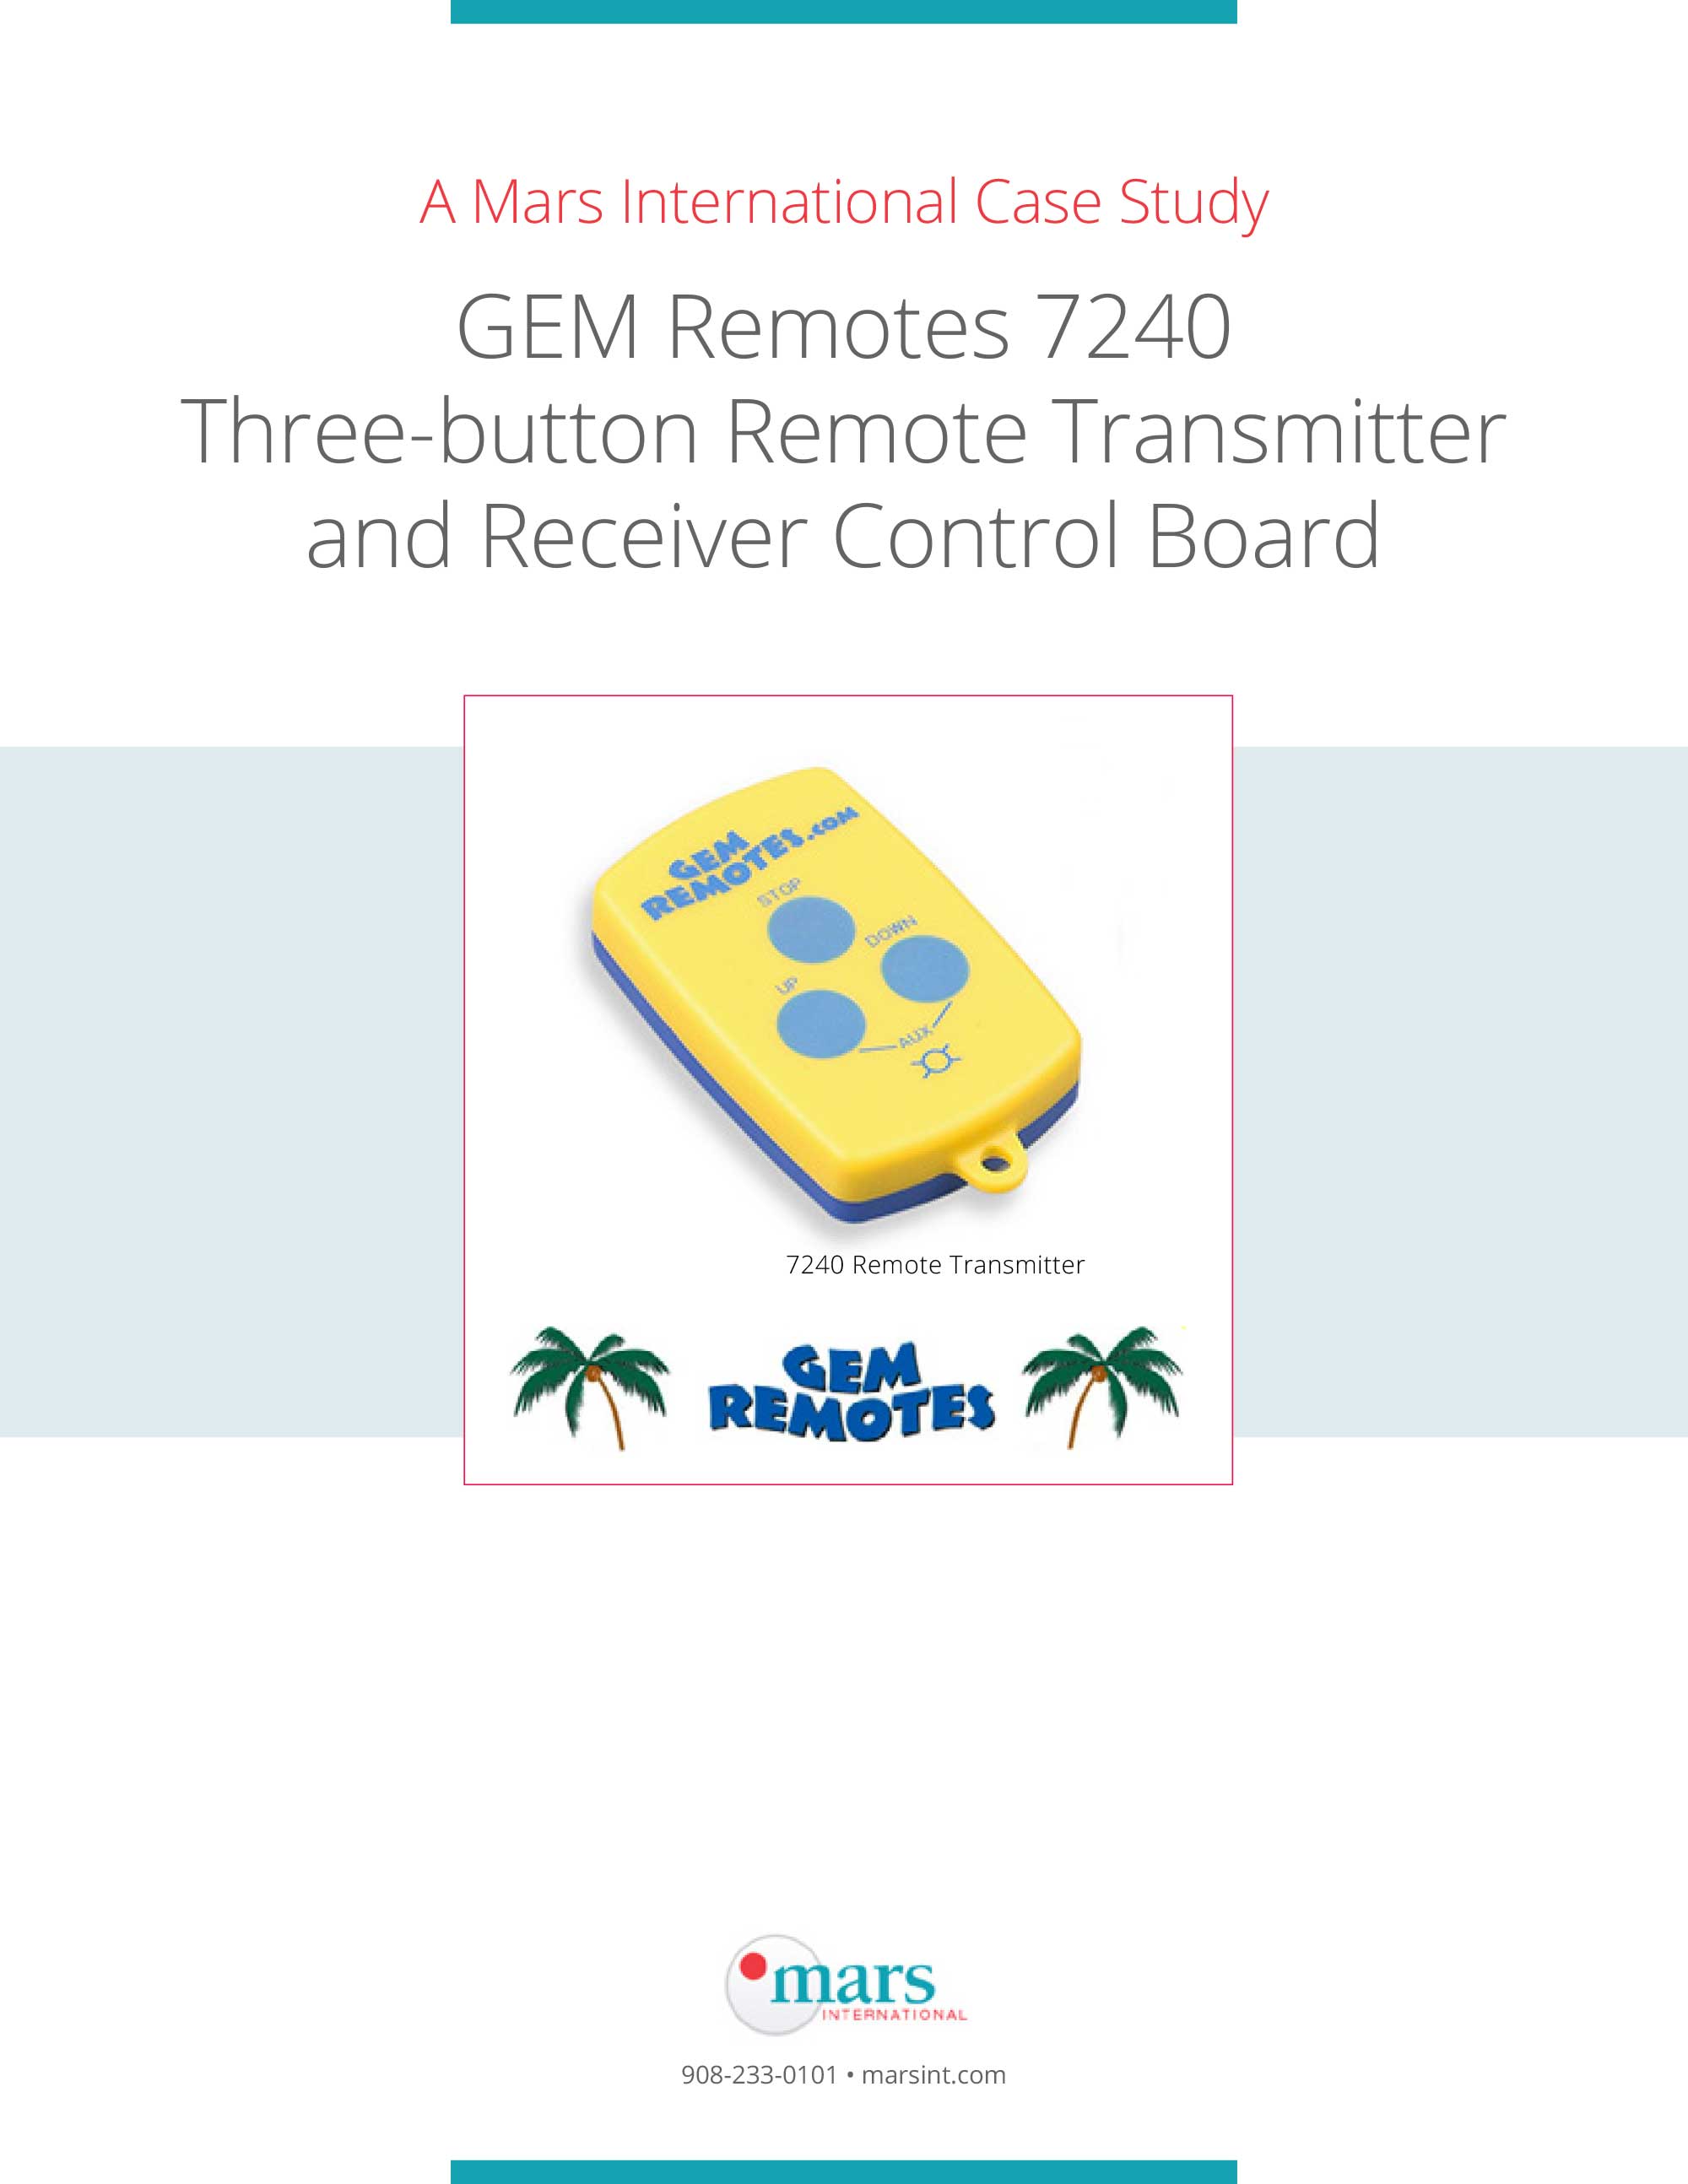 remote to remote transfer speed transmit 5